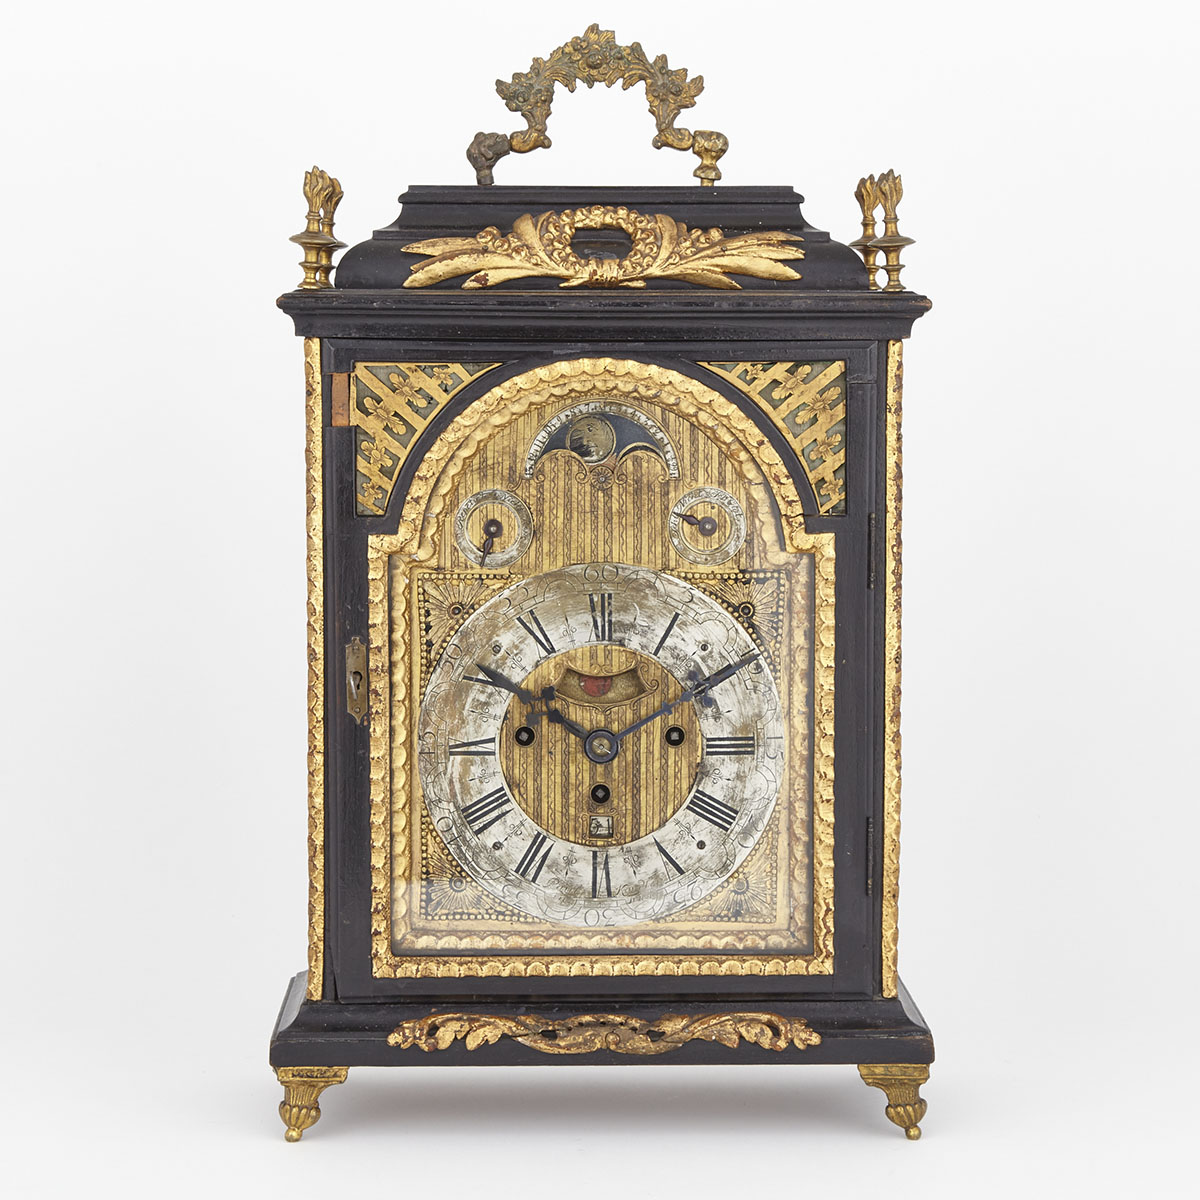 Austrian Grande Sonnerie Bracket Clock, Paul Kandler, Trieste, late 18th century